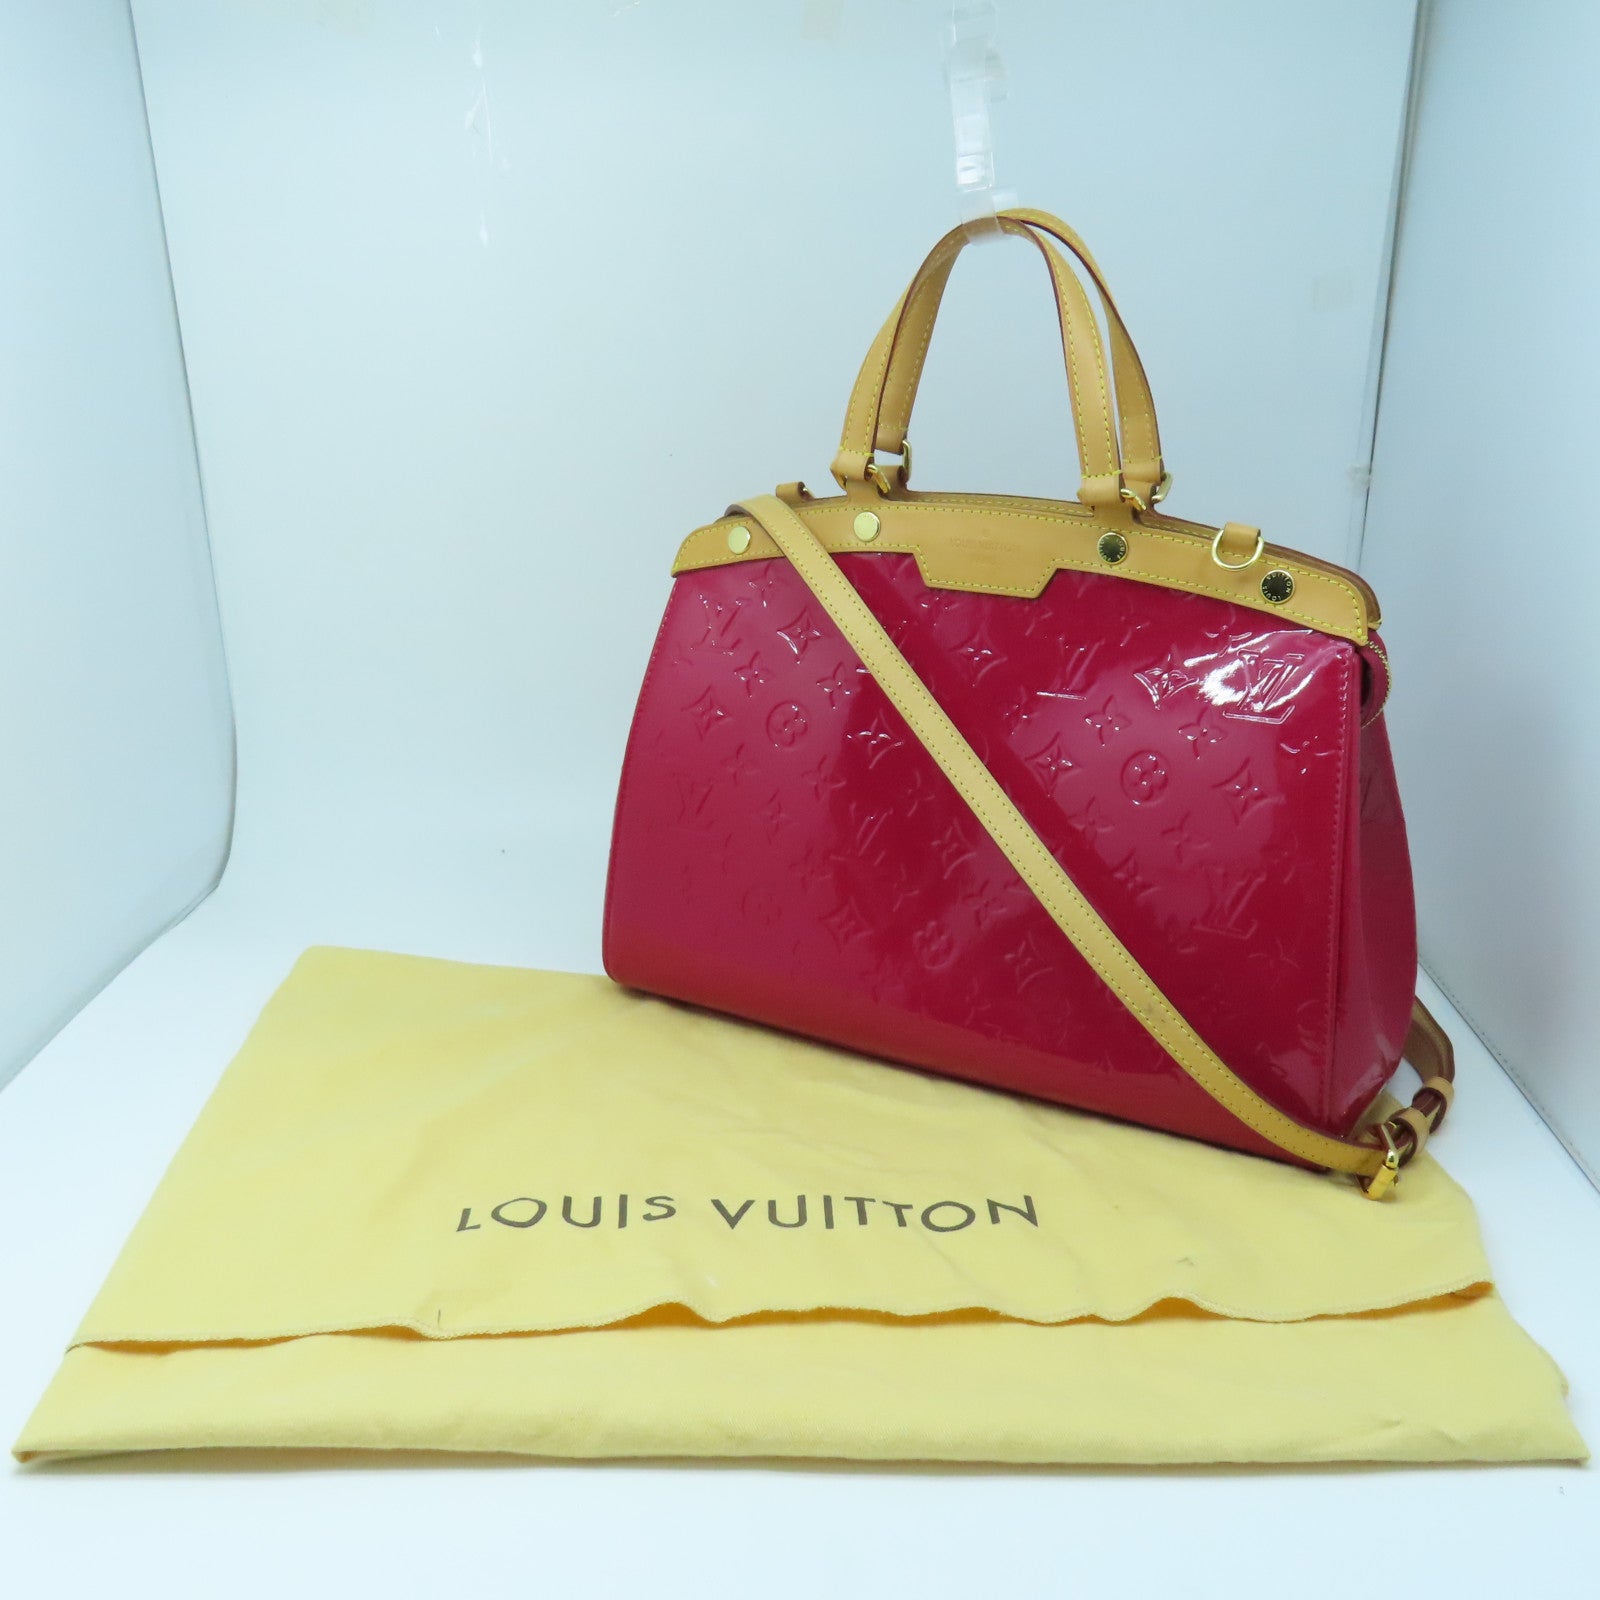 LOUIS VUITTON Monogram Vernis Brea MM gold buckle handle shoulder bag red